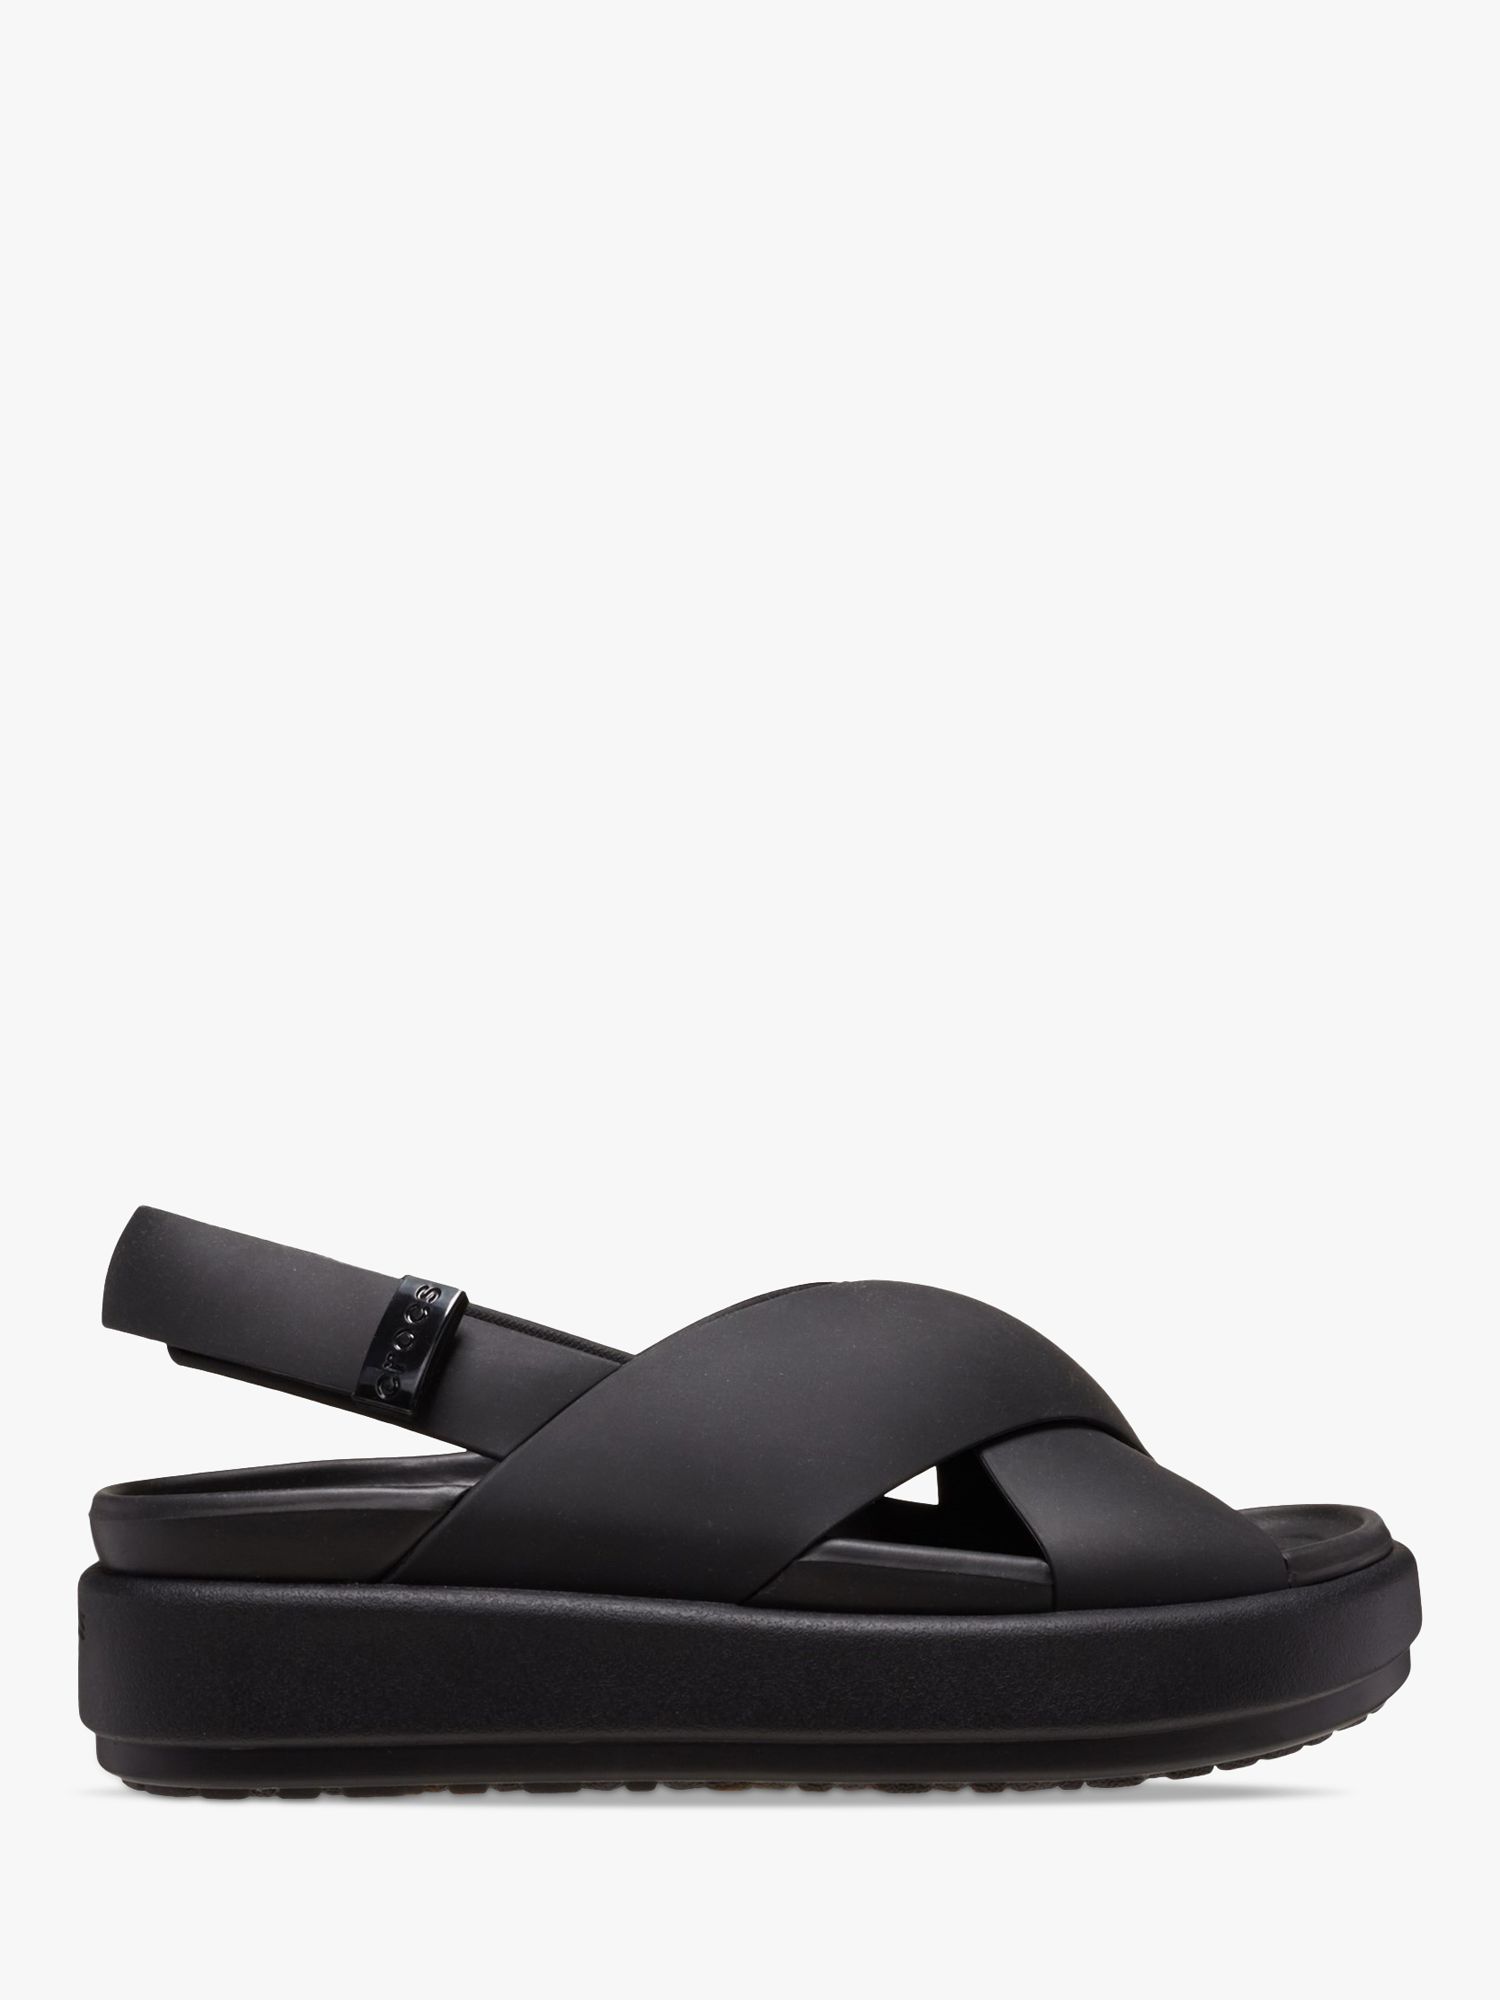 Crocs Brooklyn Luxe X-Strap Sandals, Black, 4